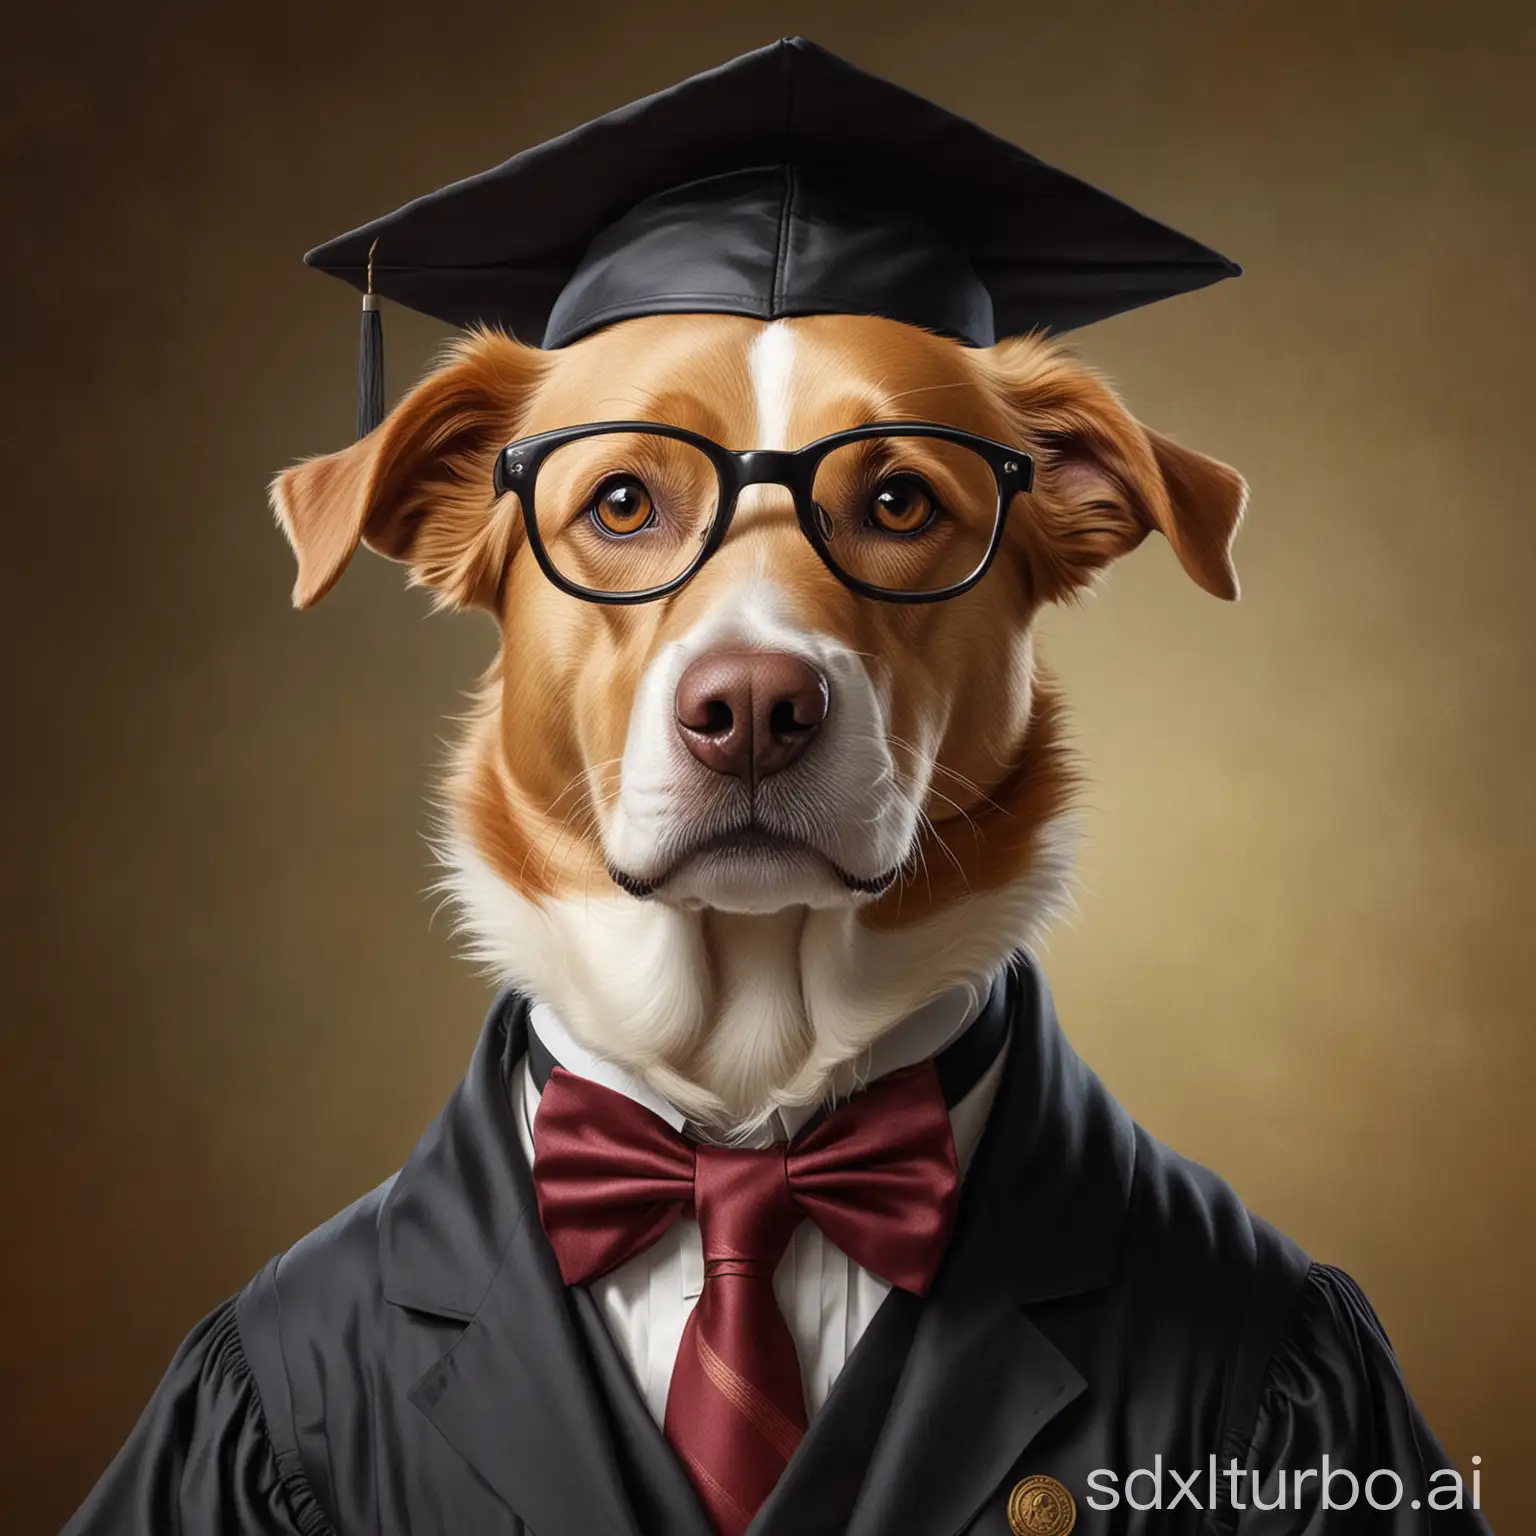 A realistic portrait of Professor Dog